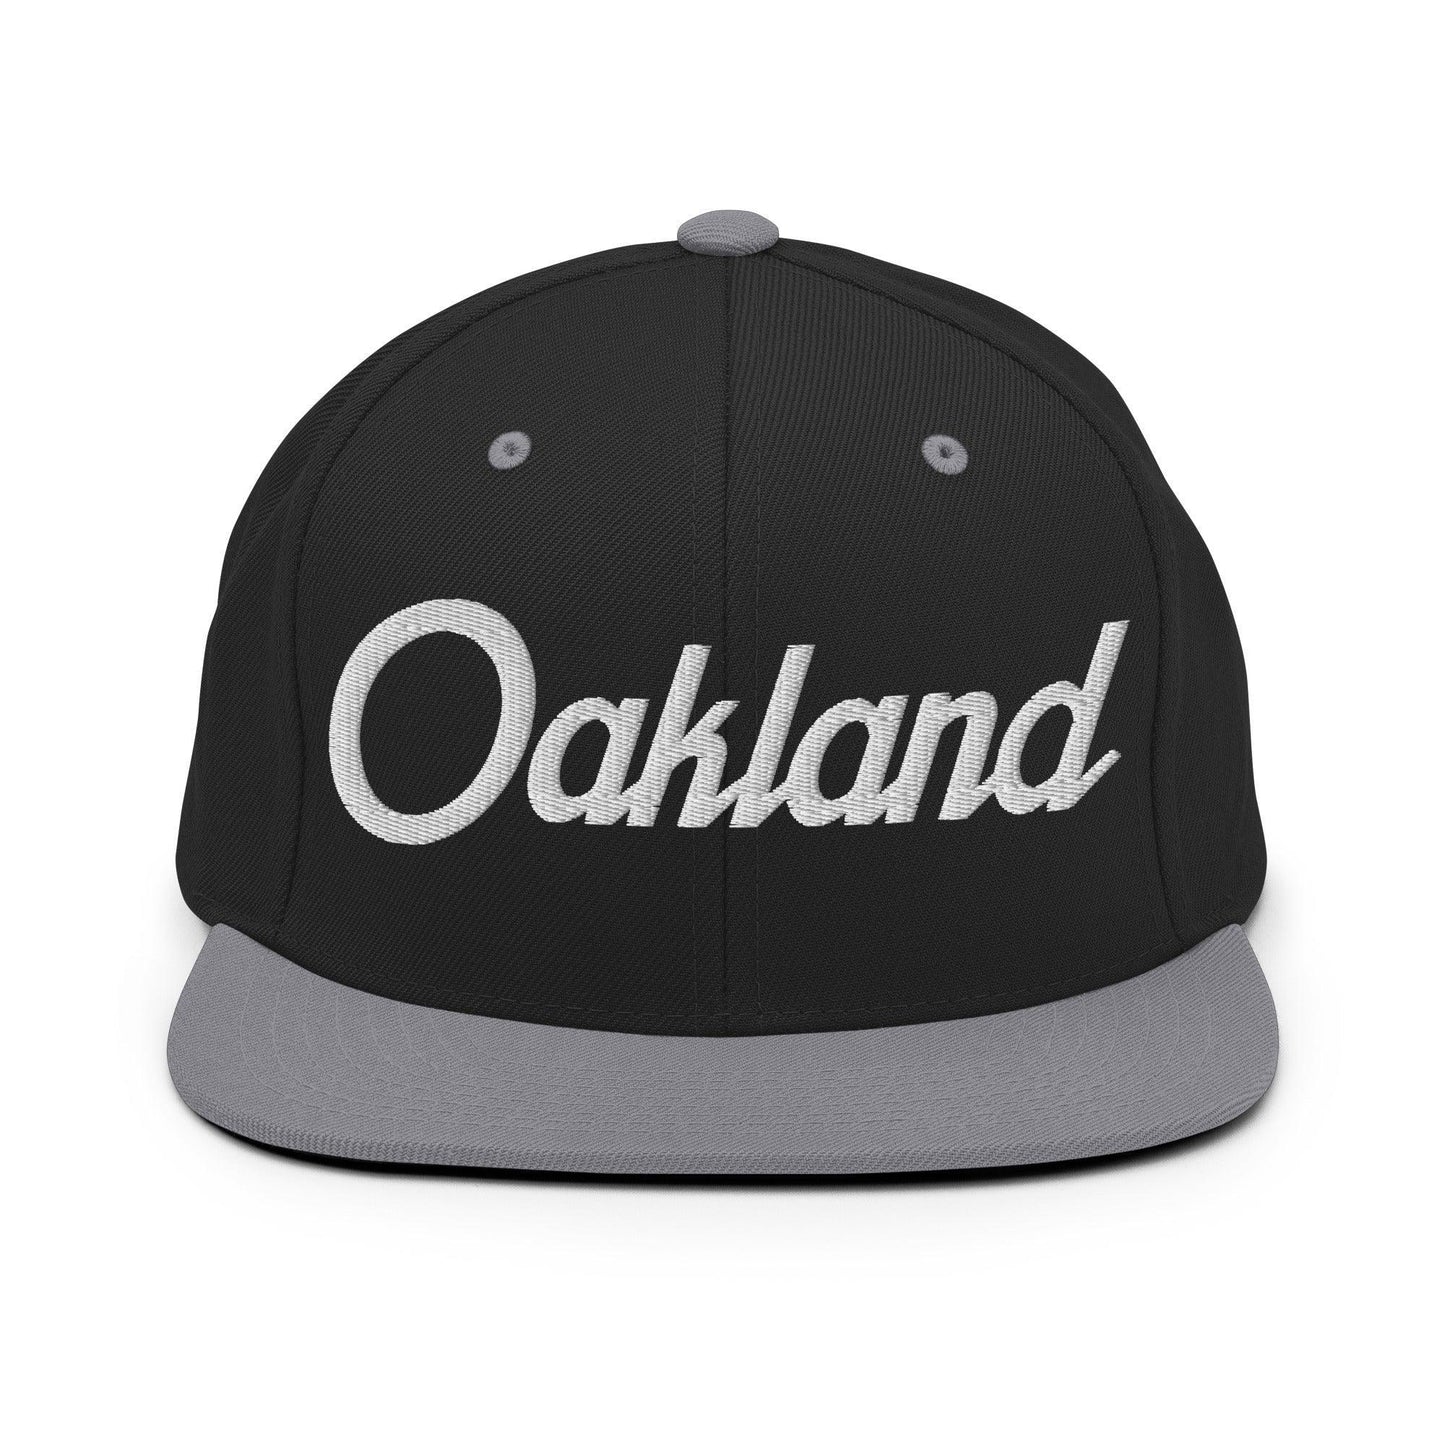 Oakland Script Snapback Hat Black/ Silver